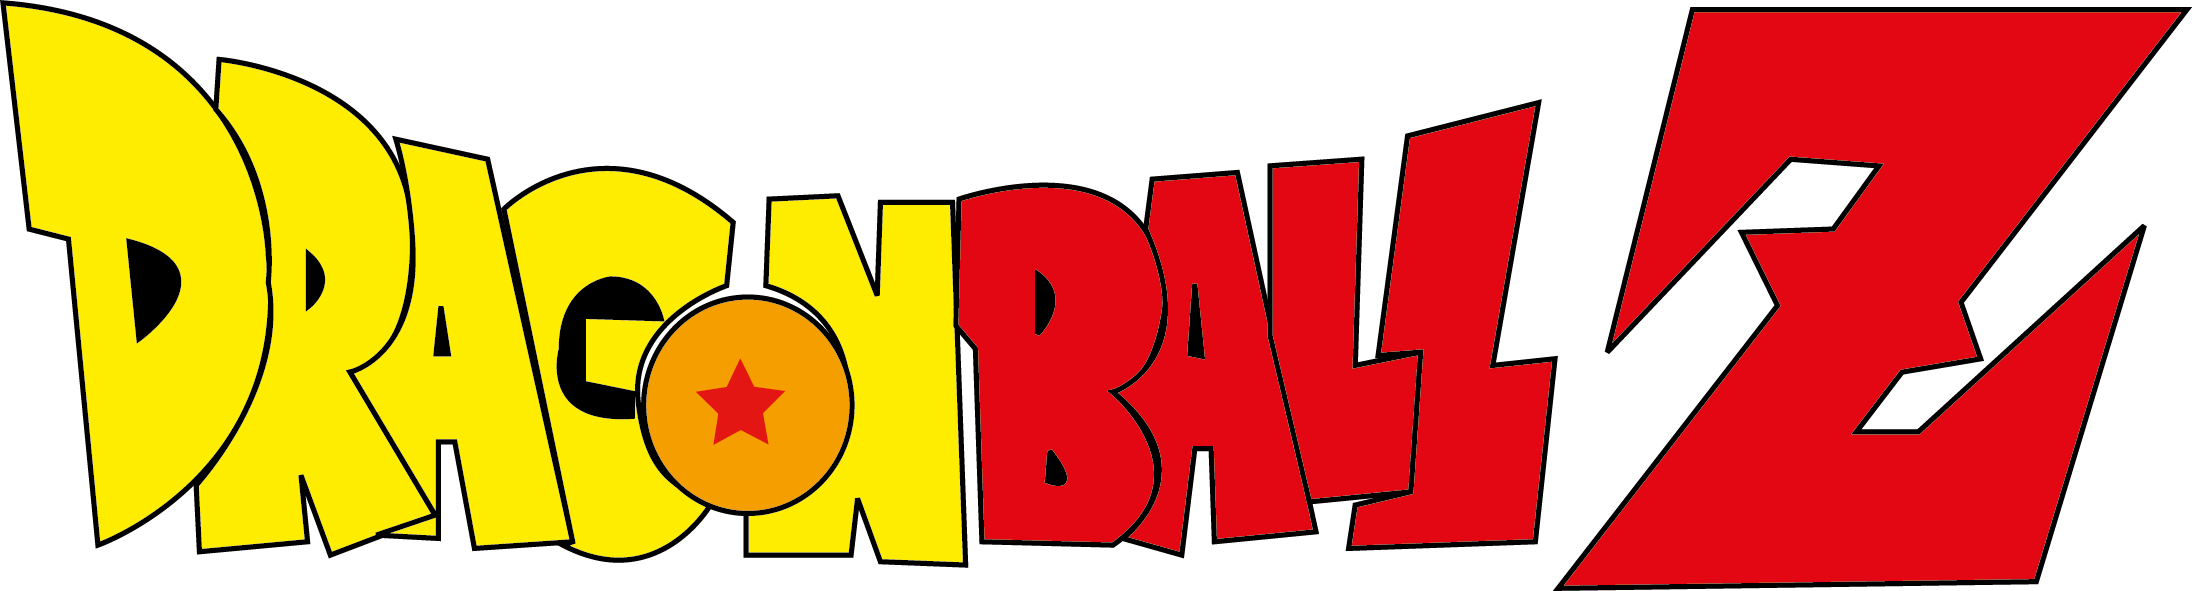 Dragon Ball Z Logo Vector Eps Free Download, Logo, - Dragon Ball Z Kai (2192x591)